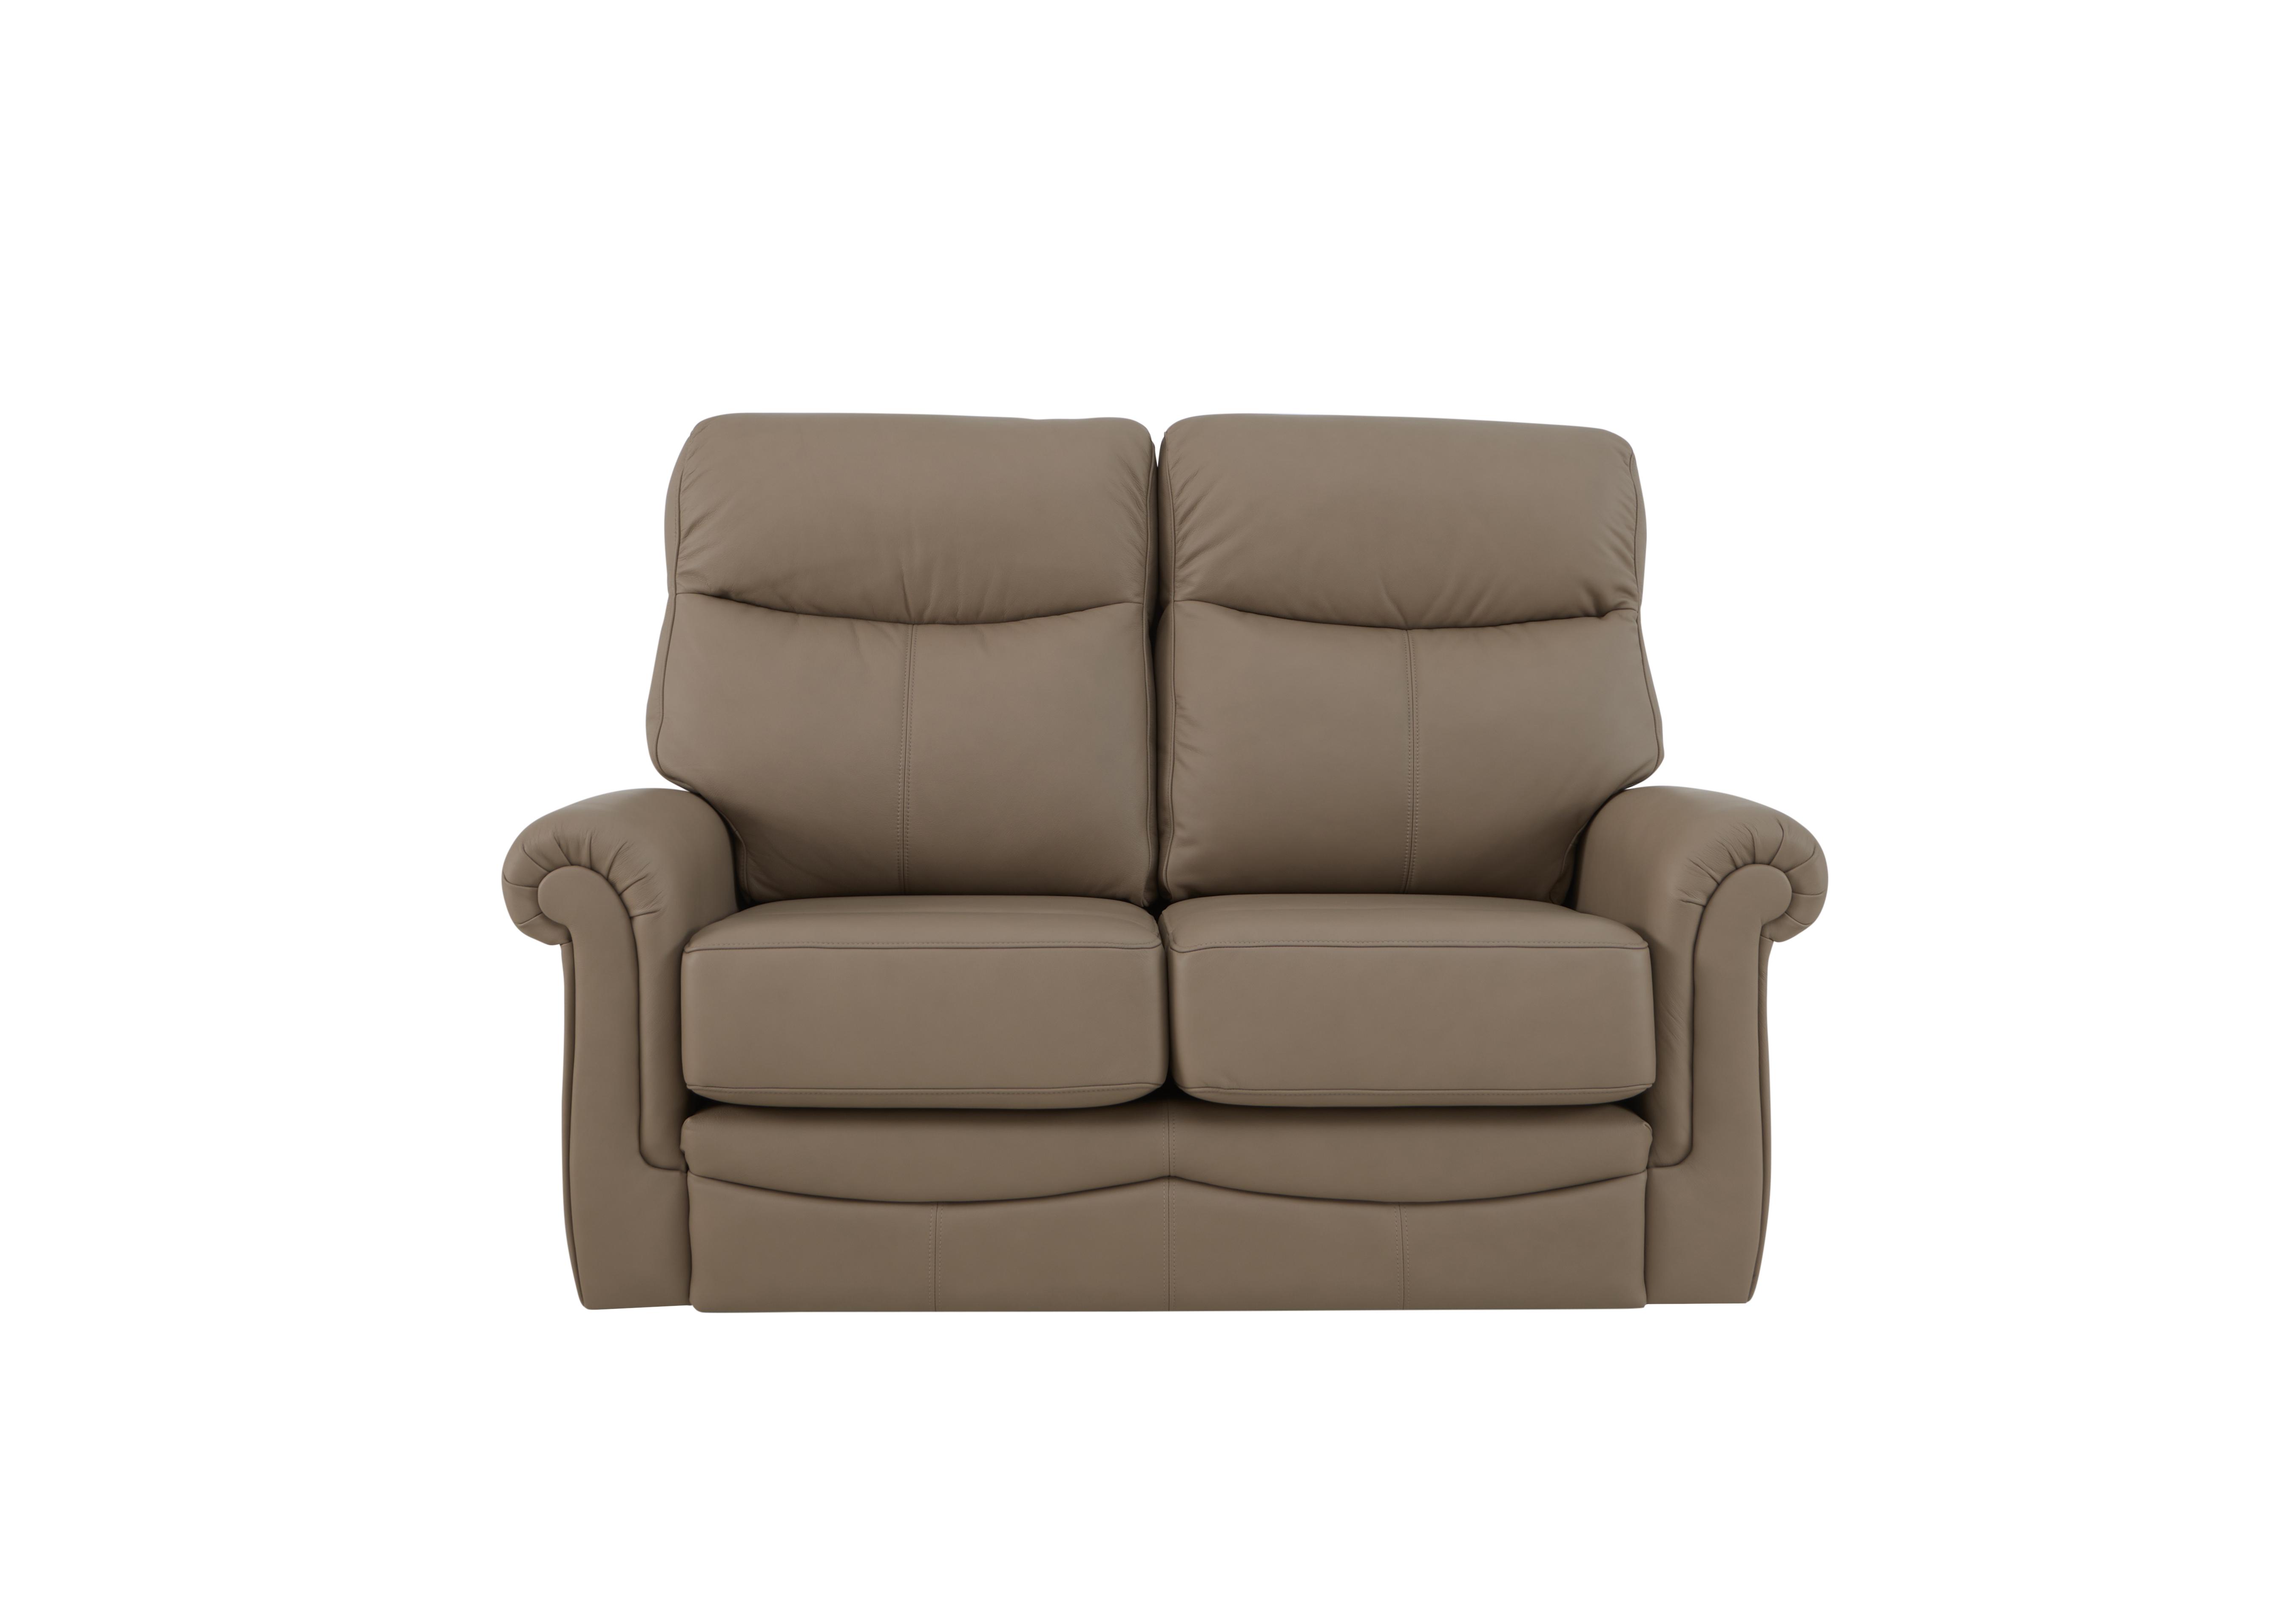 Avon Small 2 Seater Leather Sofa in L846 Cambridge Taupe on Furniture Village